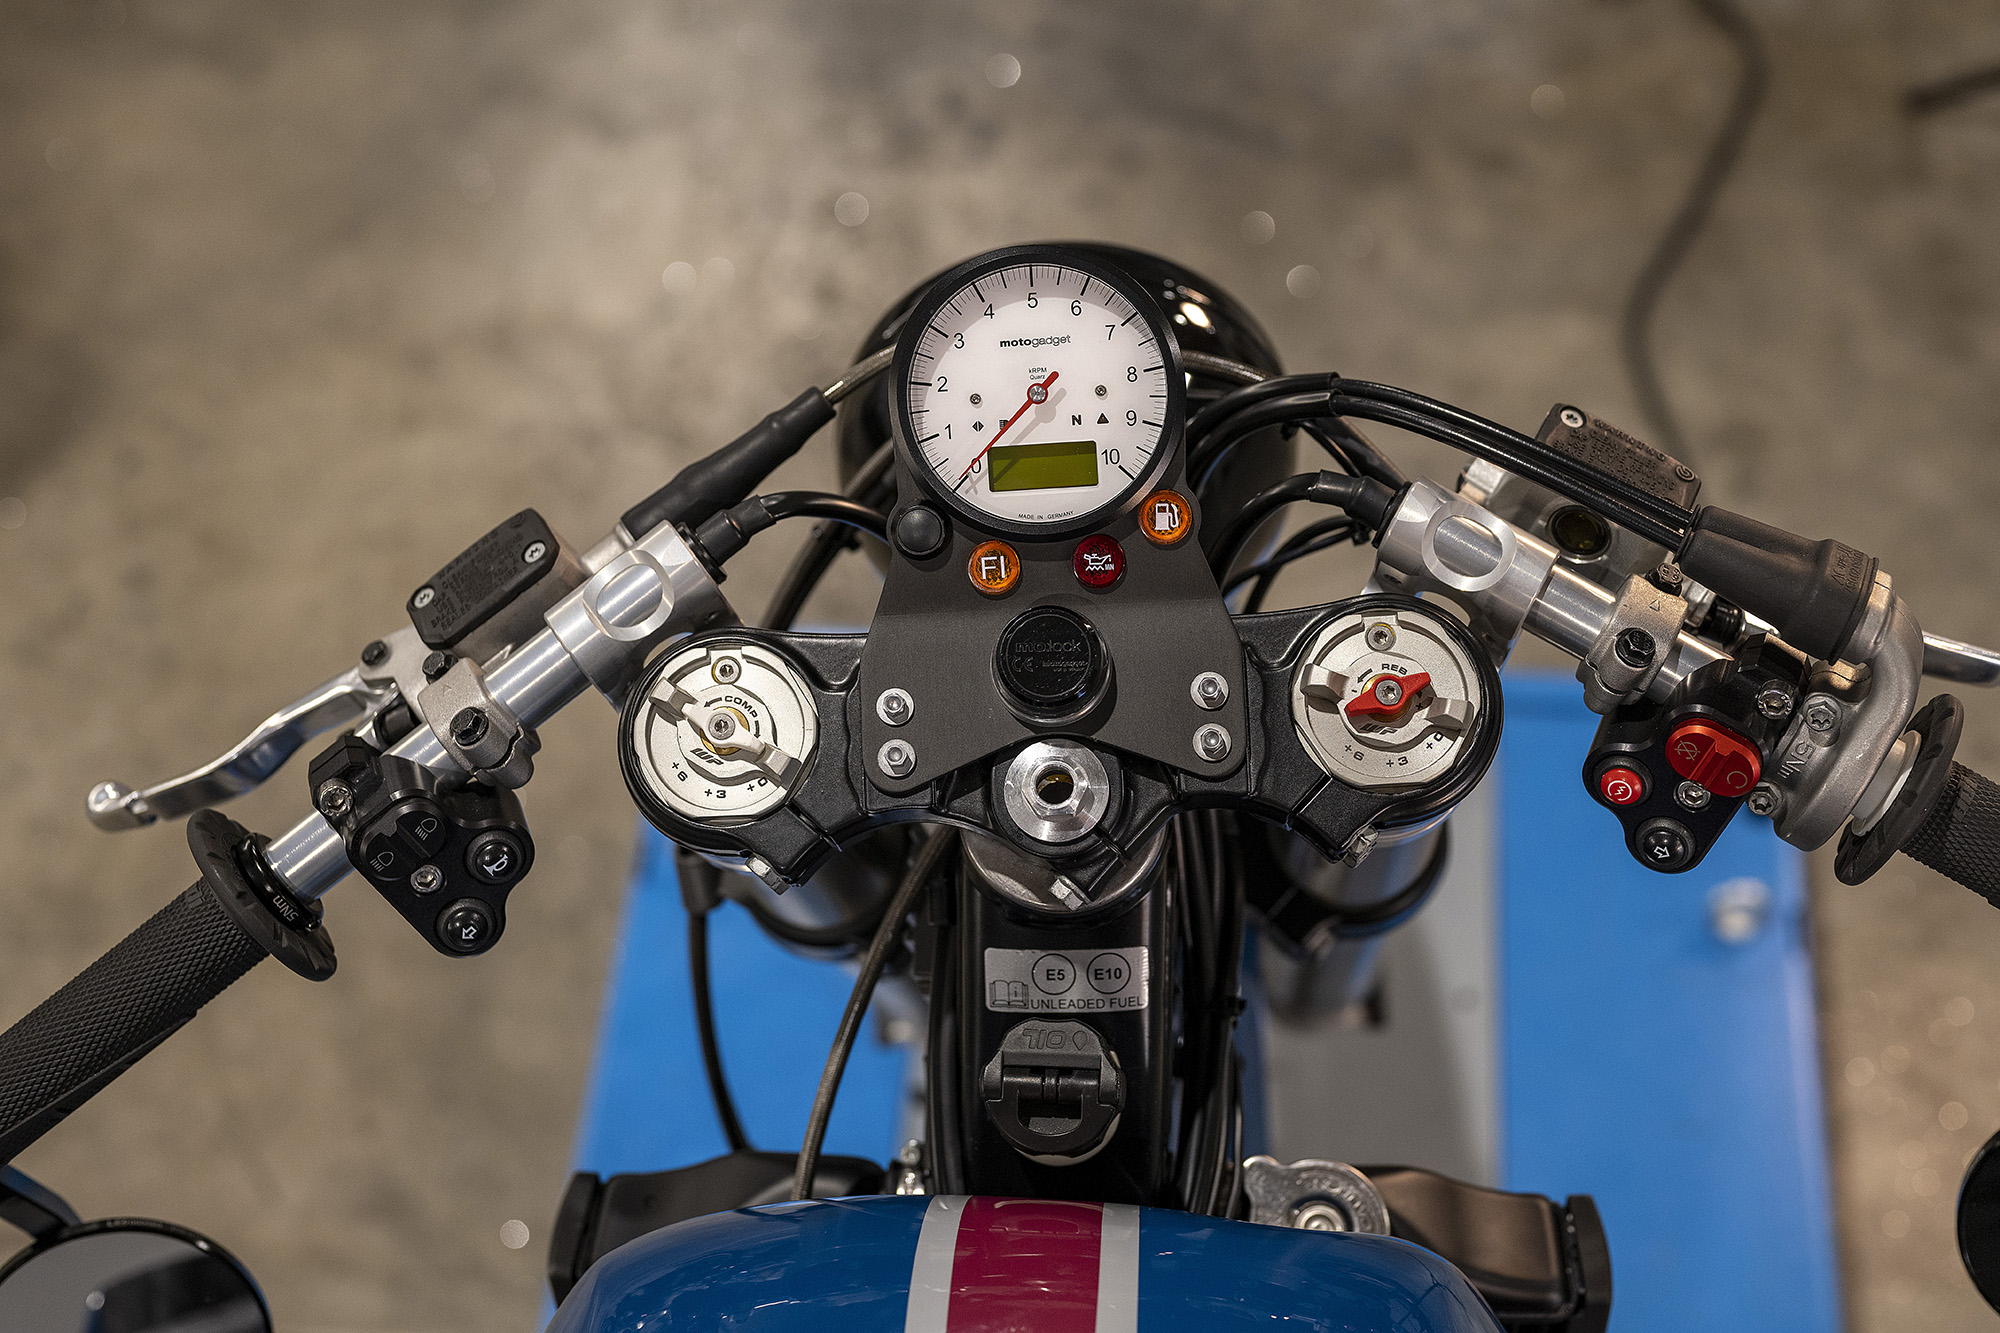 Salt two-stroke motorcycle